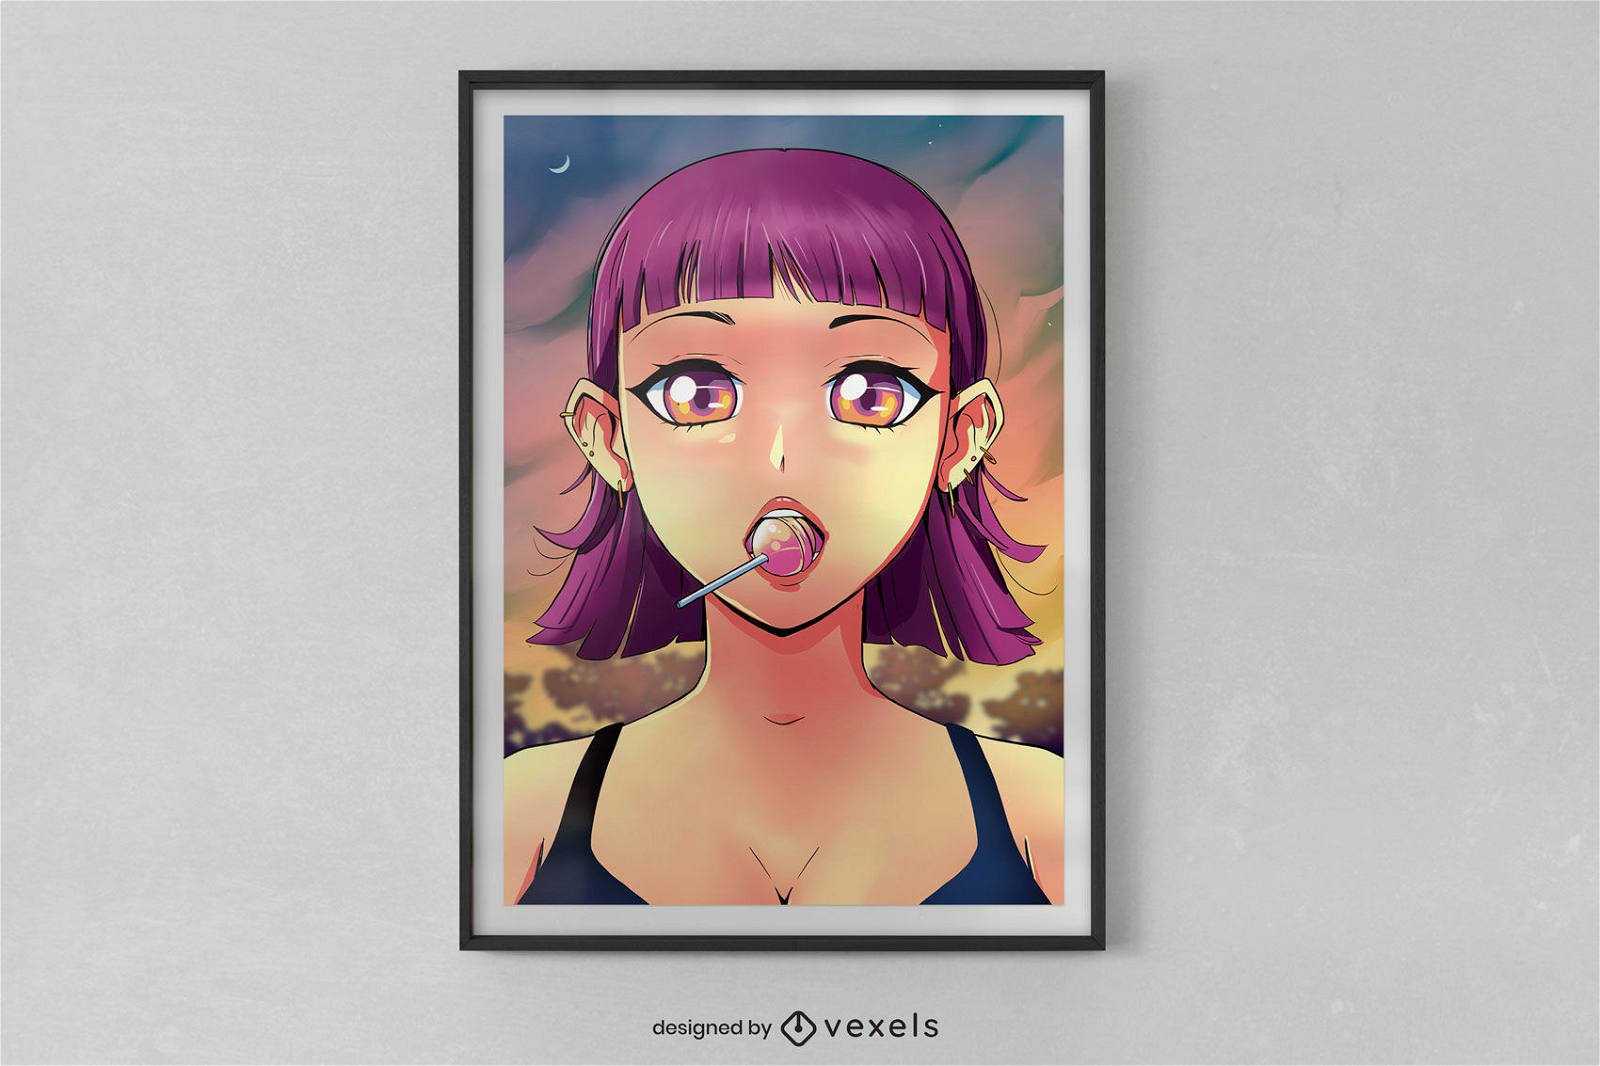 Lollipop - Anime Manga World Wallpapers and Images - Desktop Nexus Groups